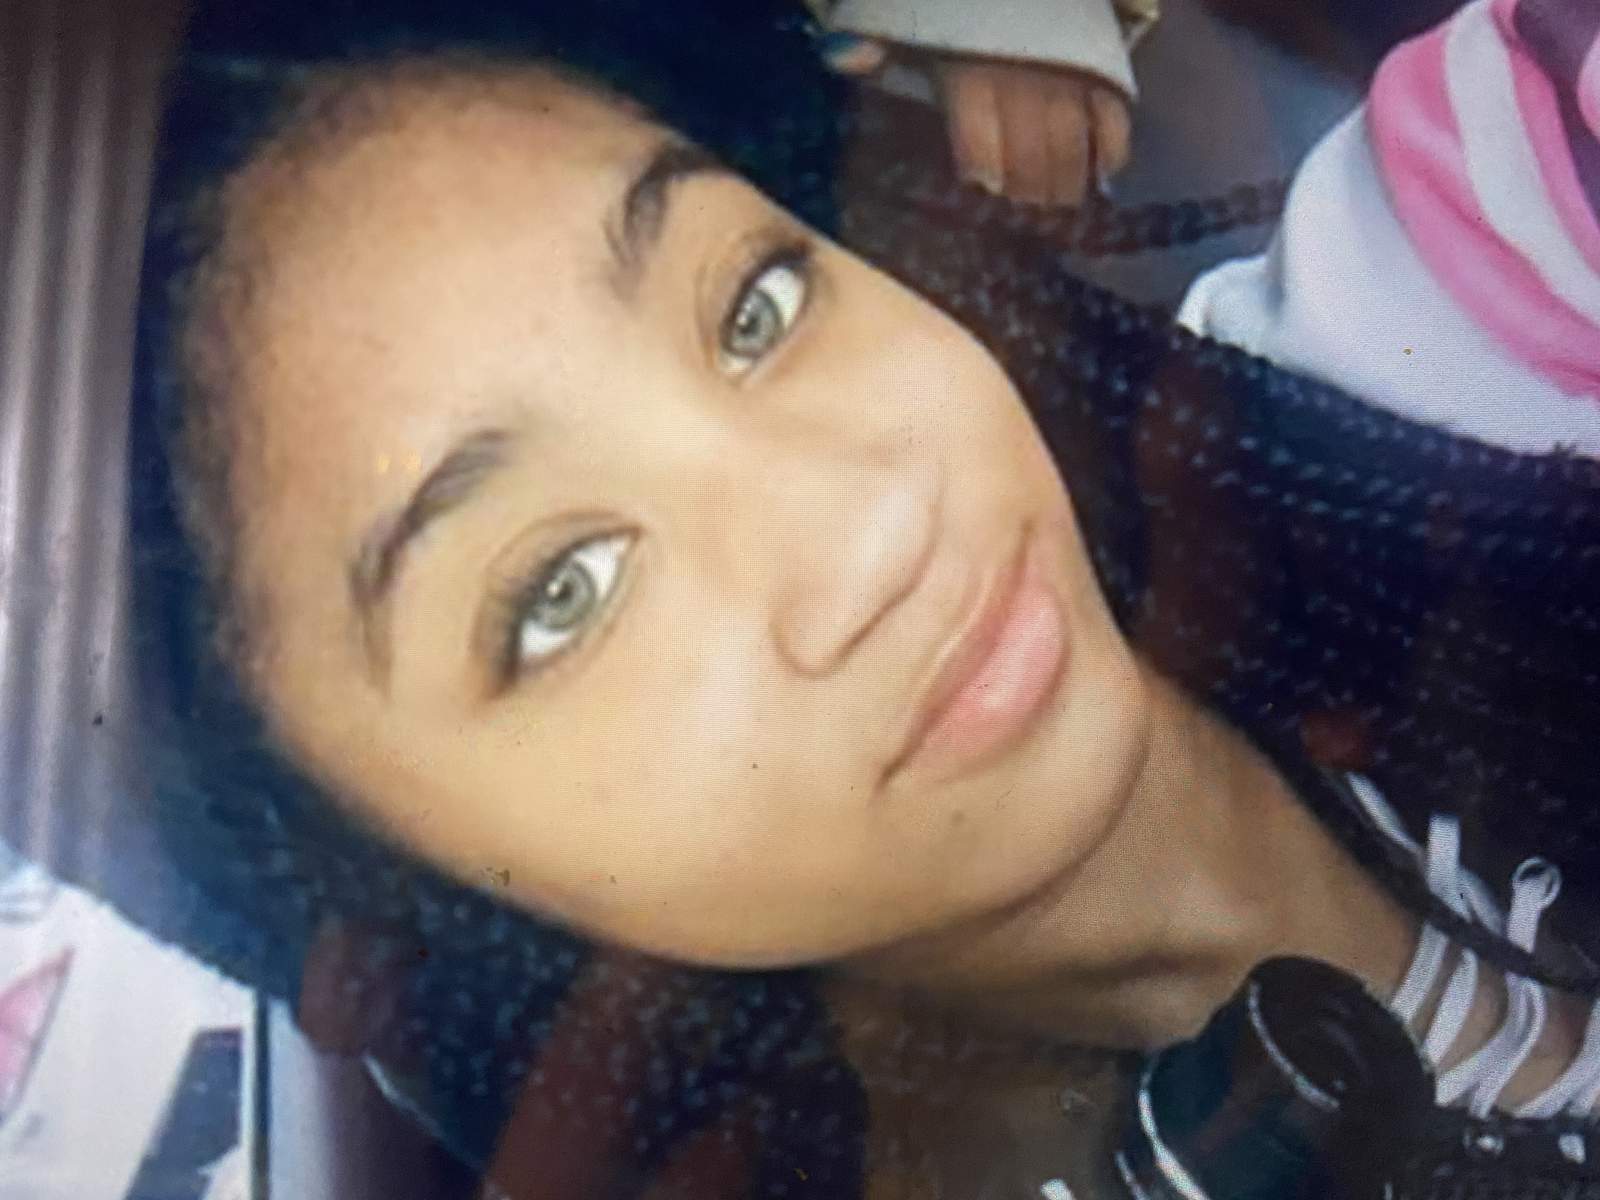 Police seek missing 13-year-old Southfield girl